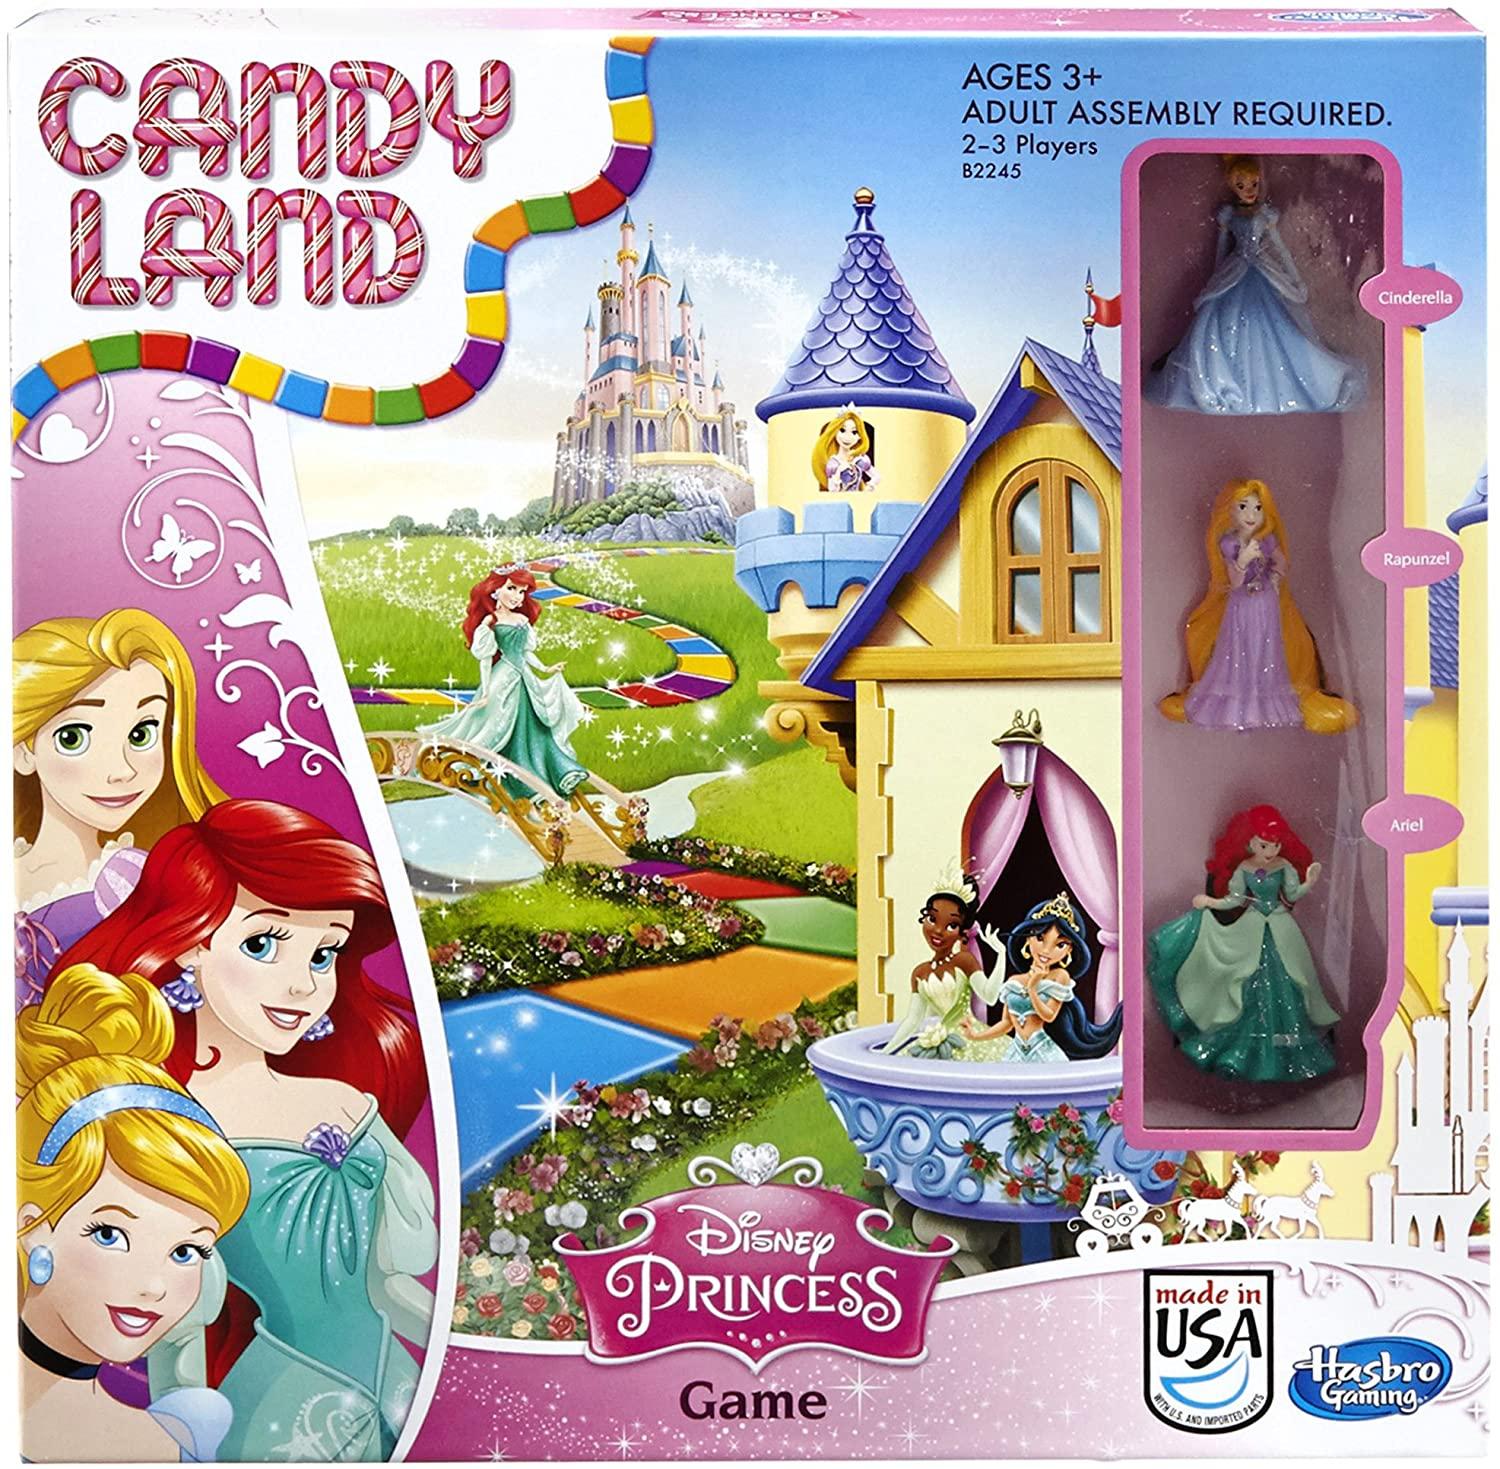 Hasbro Gaming Candy Land Disney Princess Edition Board Game for $11.99